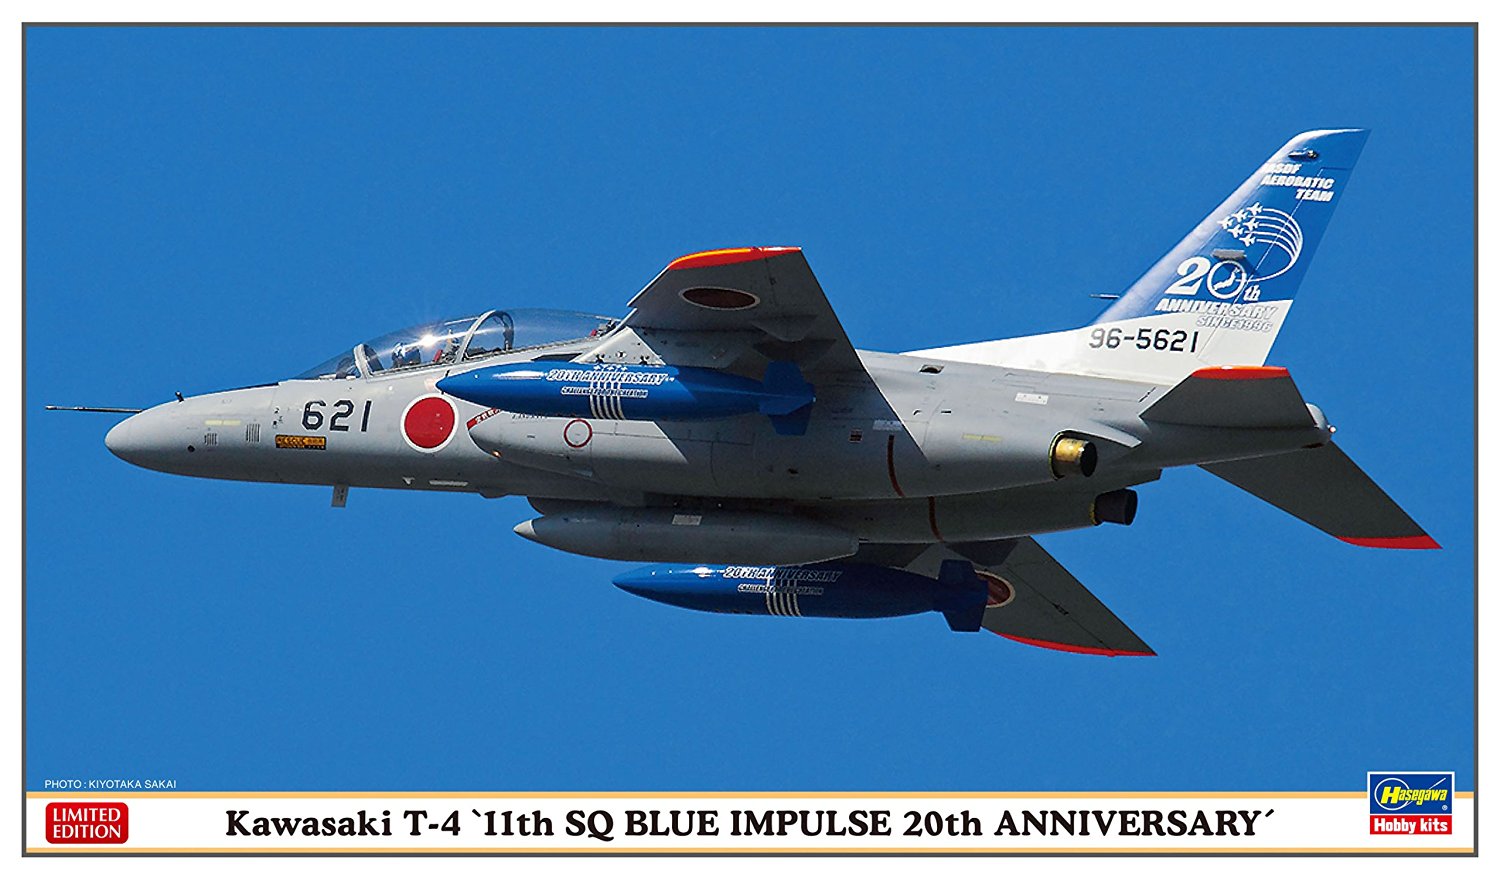 Kawasaki T-4 11th SQ Blue Impulse 20th Anniversary